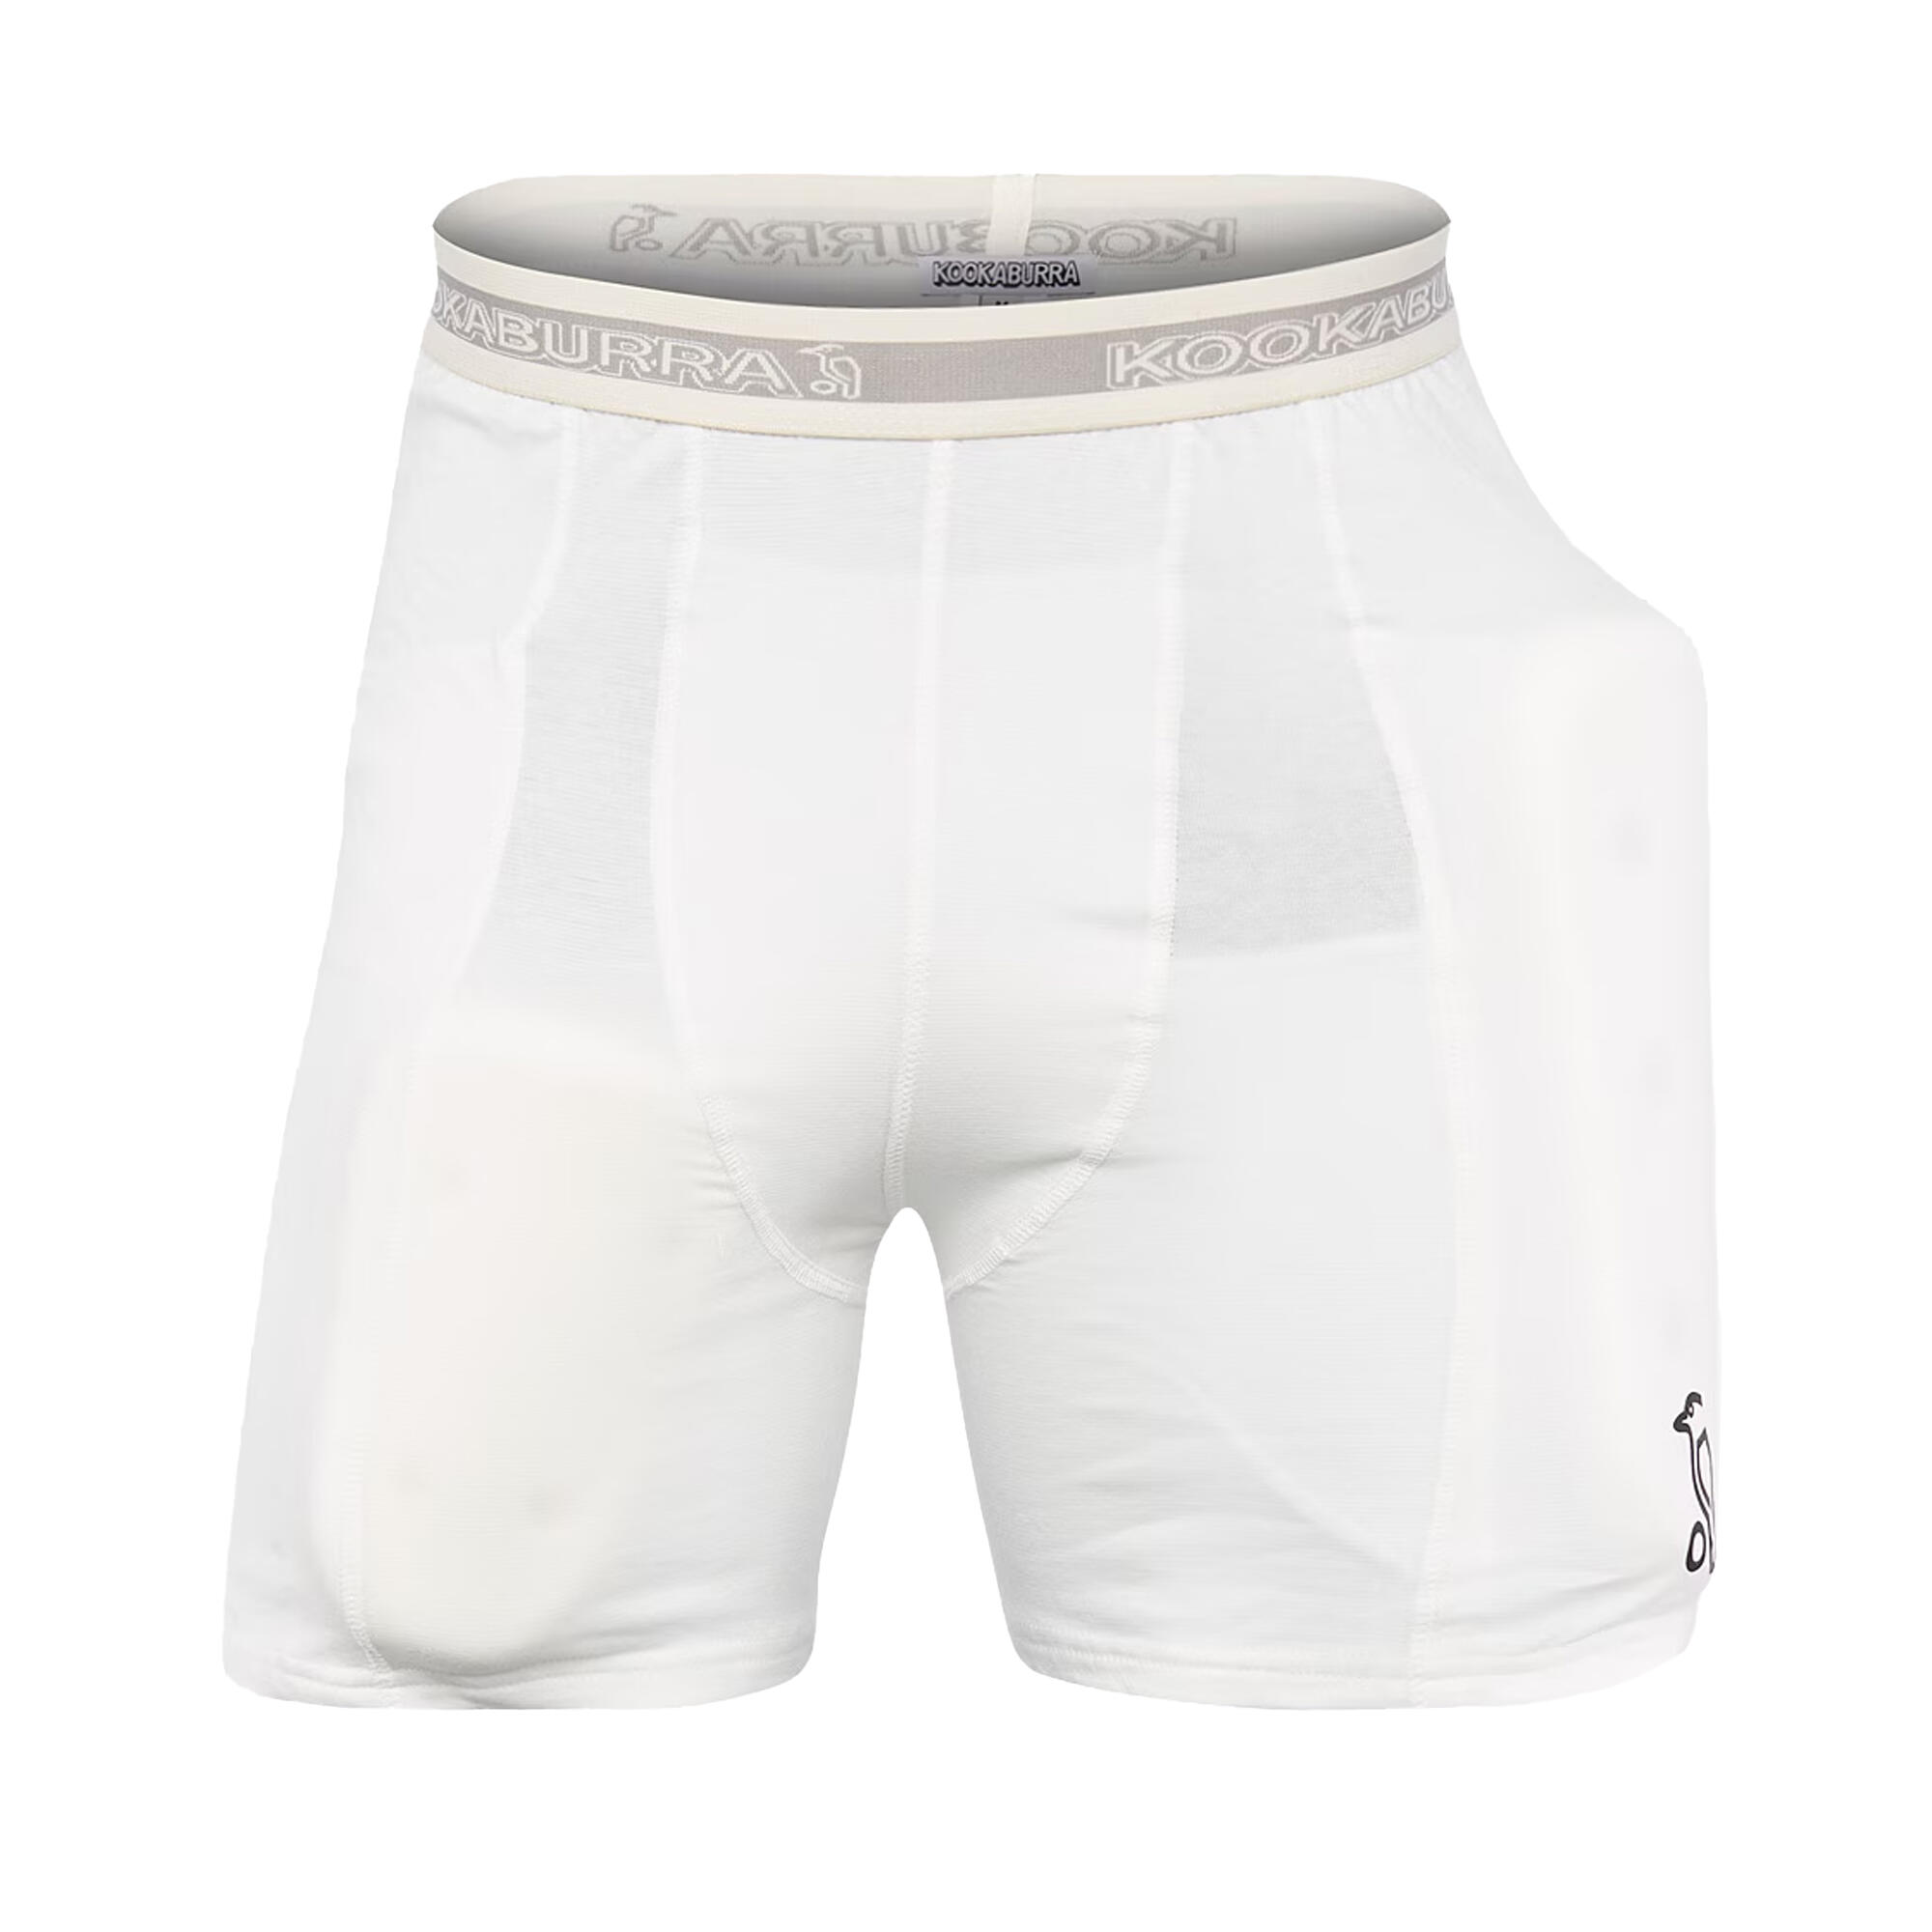 KOOKABURRA Mens Protective Padded Shorts (White)